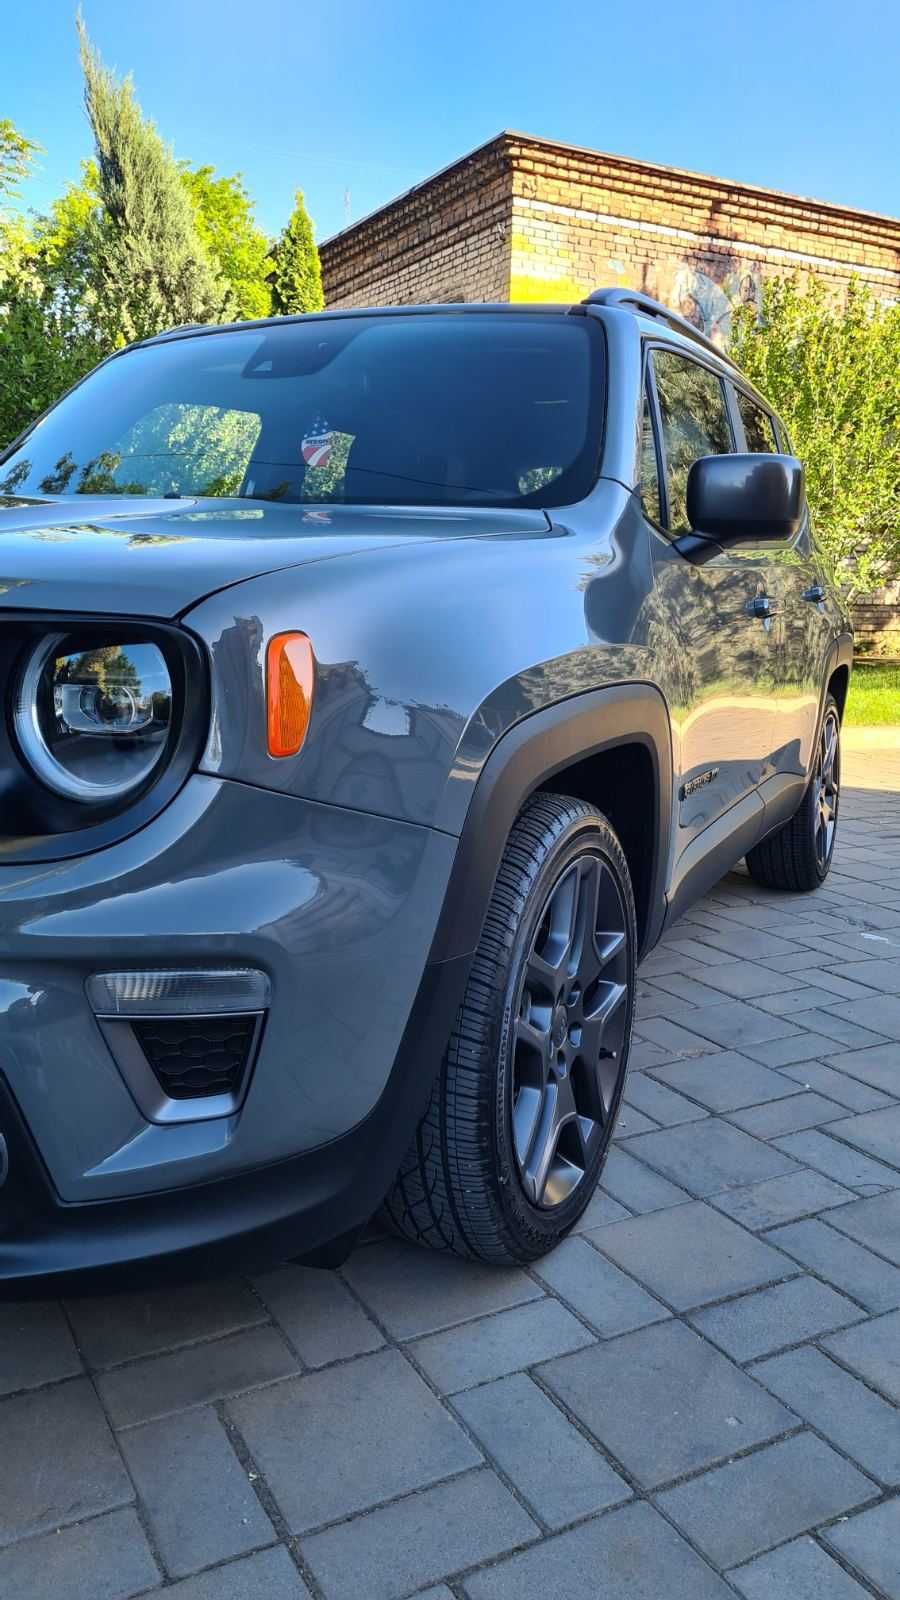 продам Jeep Renegade 2020 года Рестайлинг